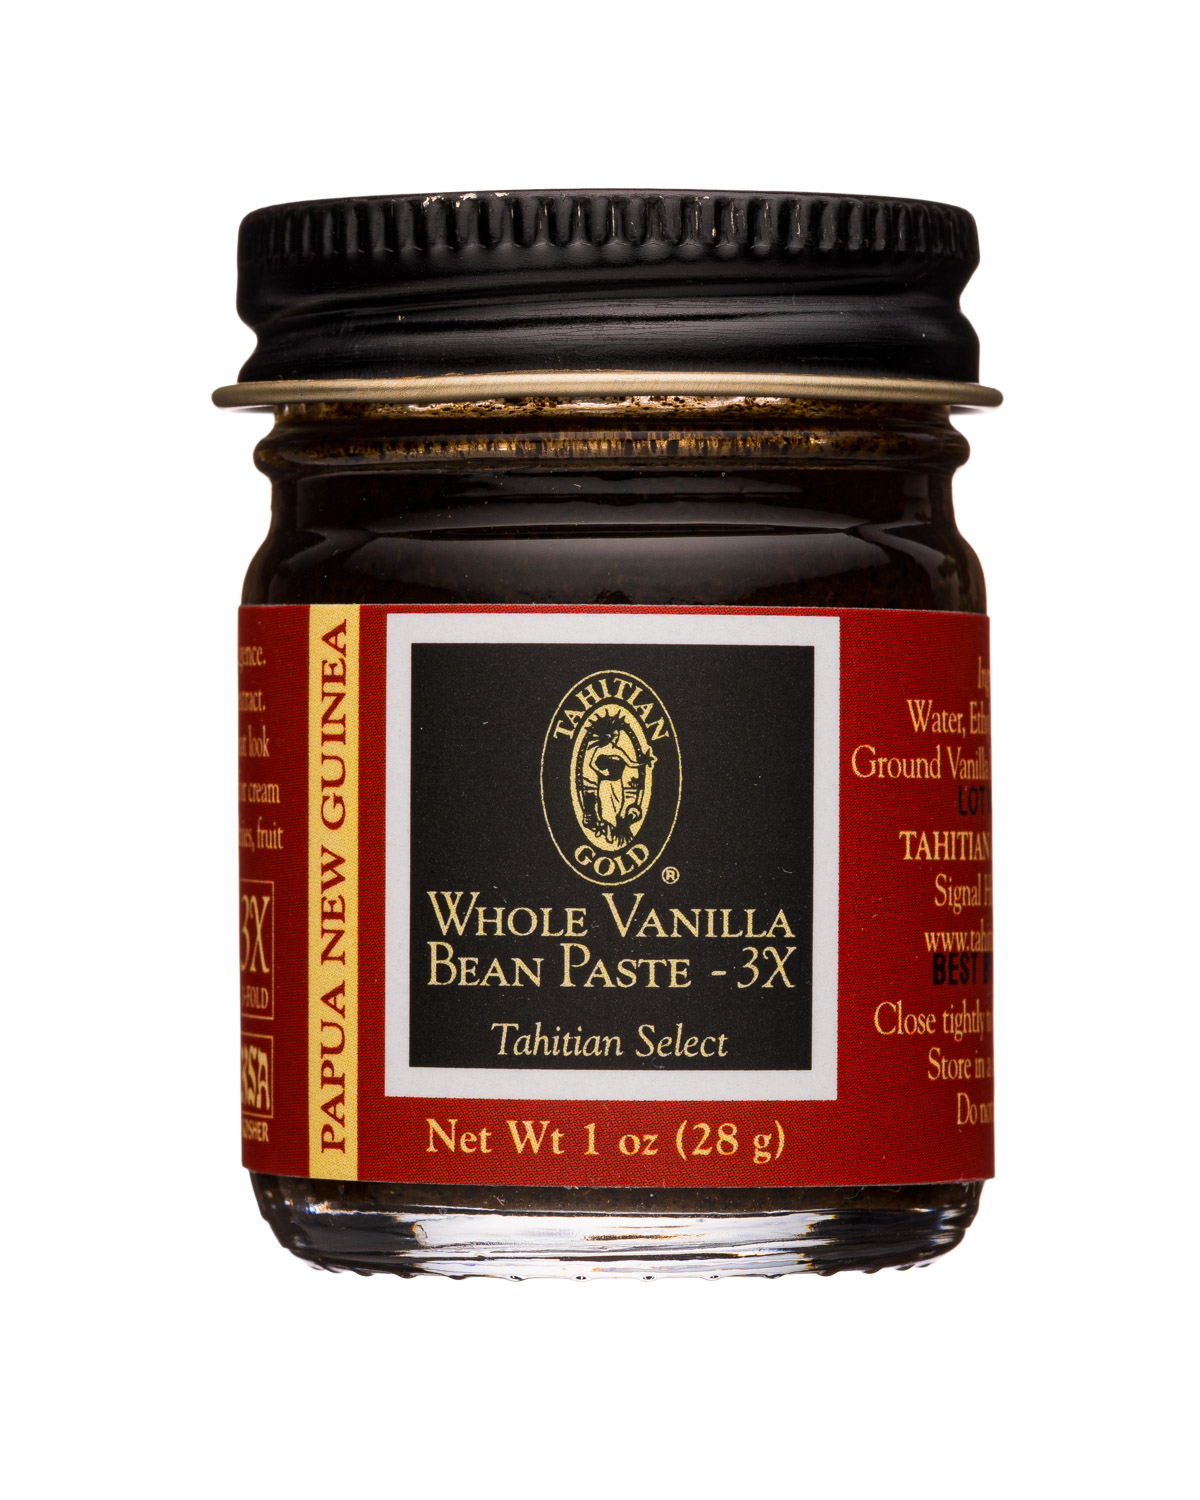 Whole Vanilla Bean Paste - 3X (Tahitian Select)